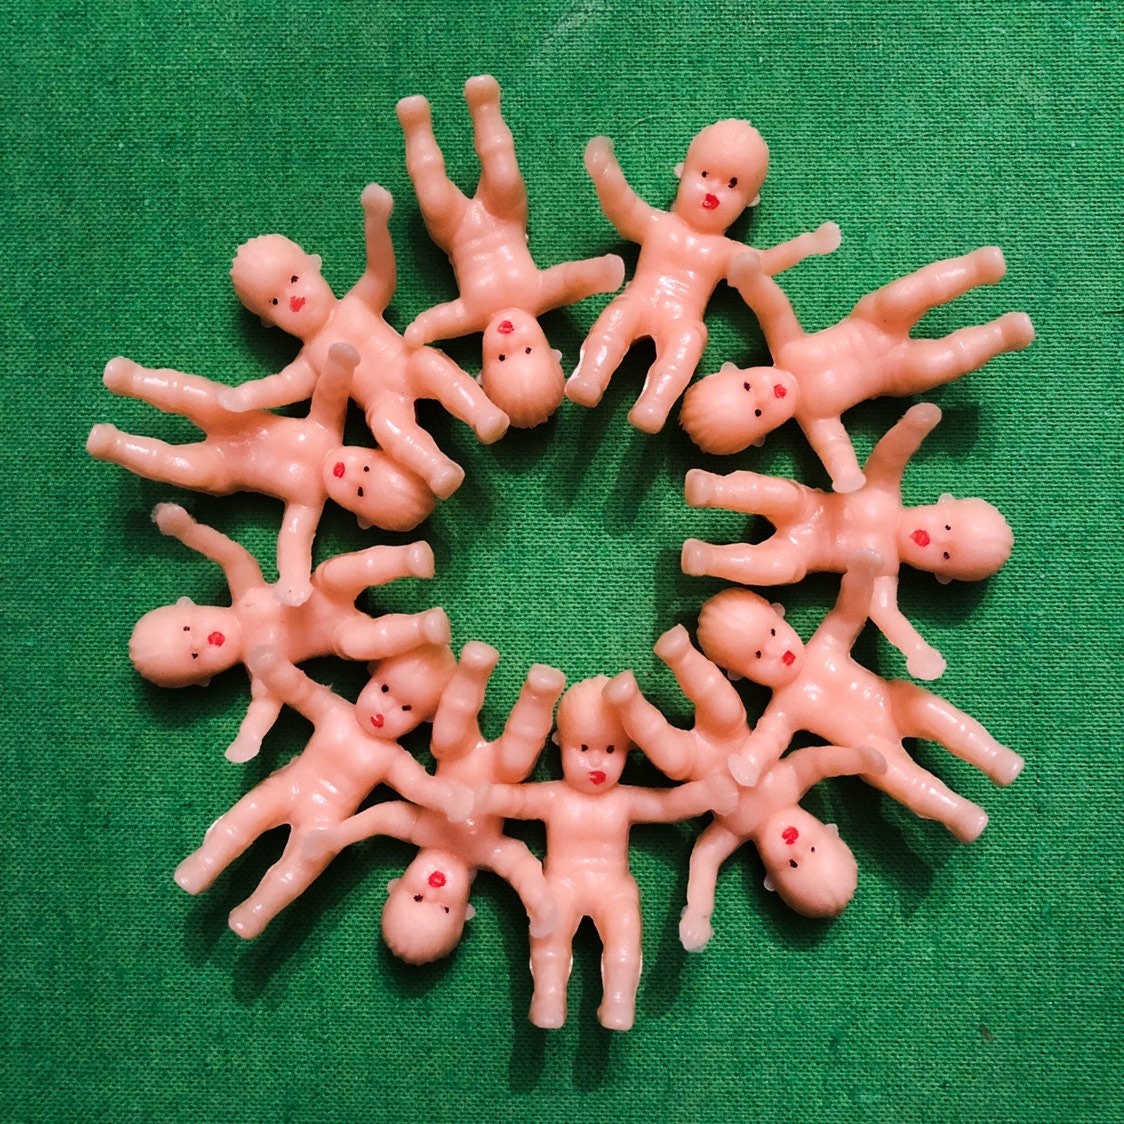 Mini Plastic Babies, Selizo 100pcs Tiny Plastic Baby Figurines